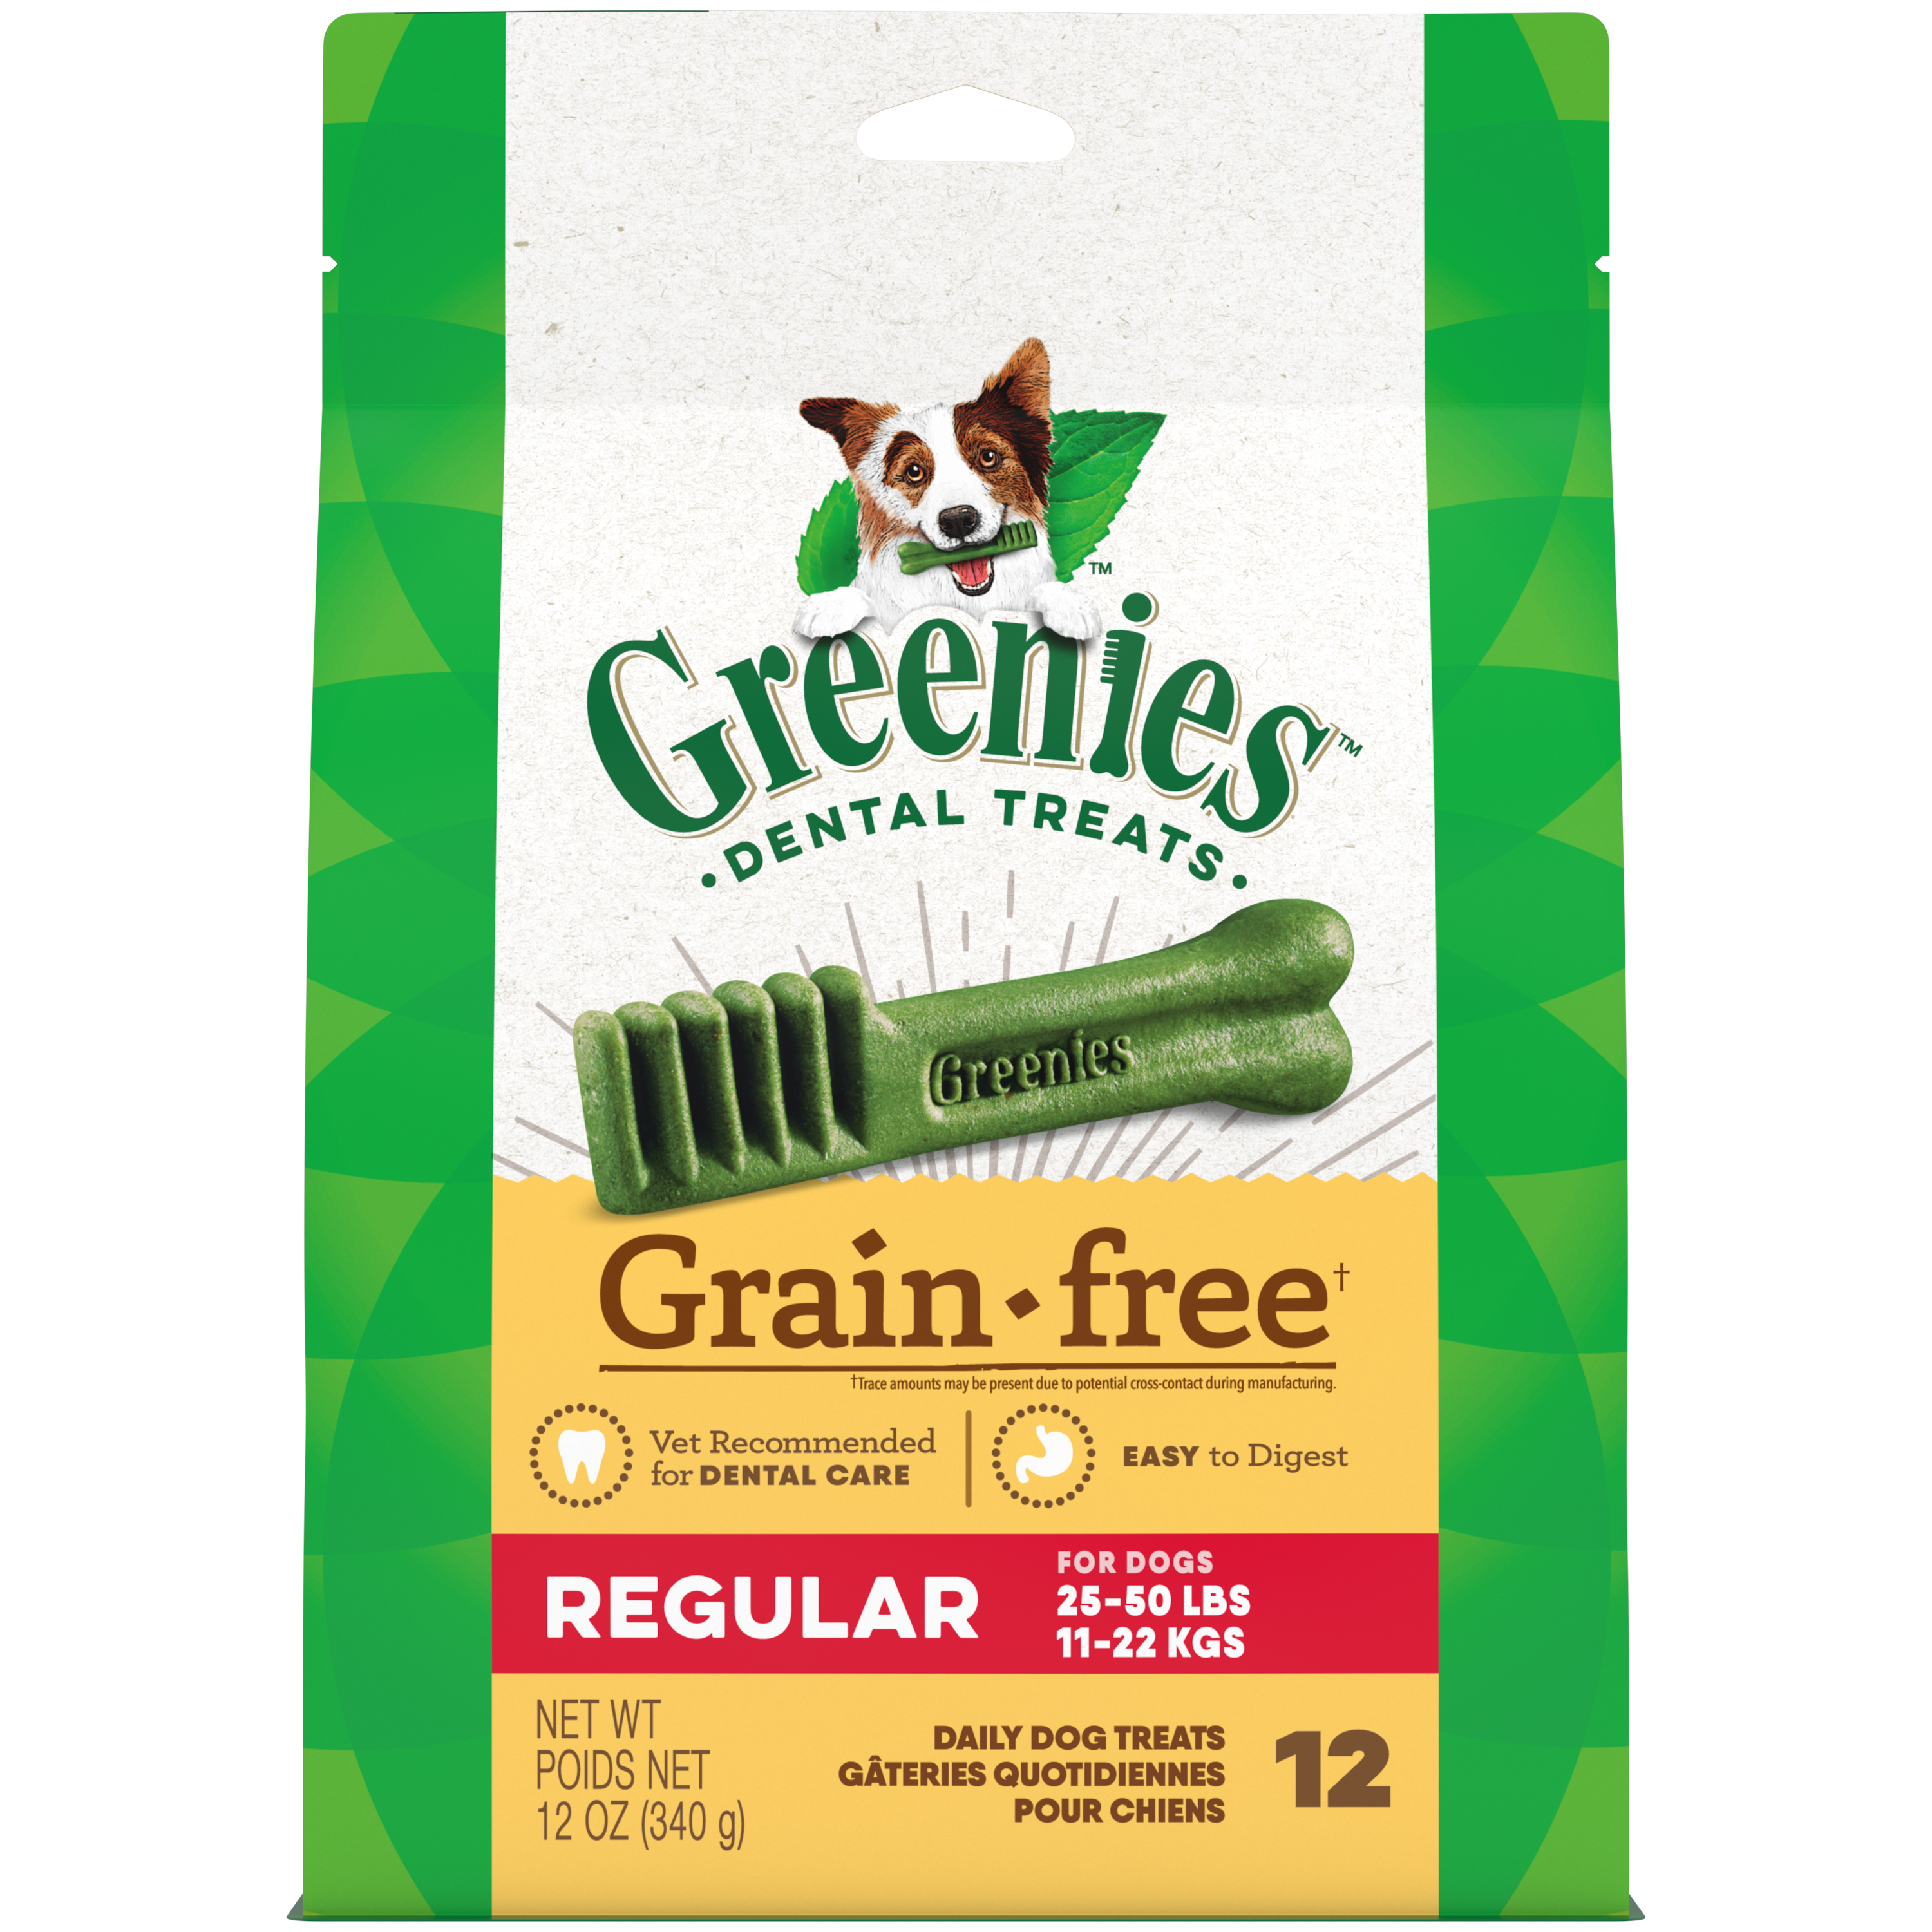 12 oz. Greenies Grain Free Regular Treat Pack - Health/First Aid